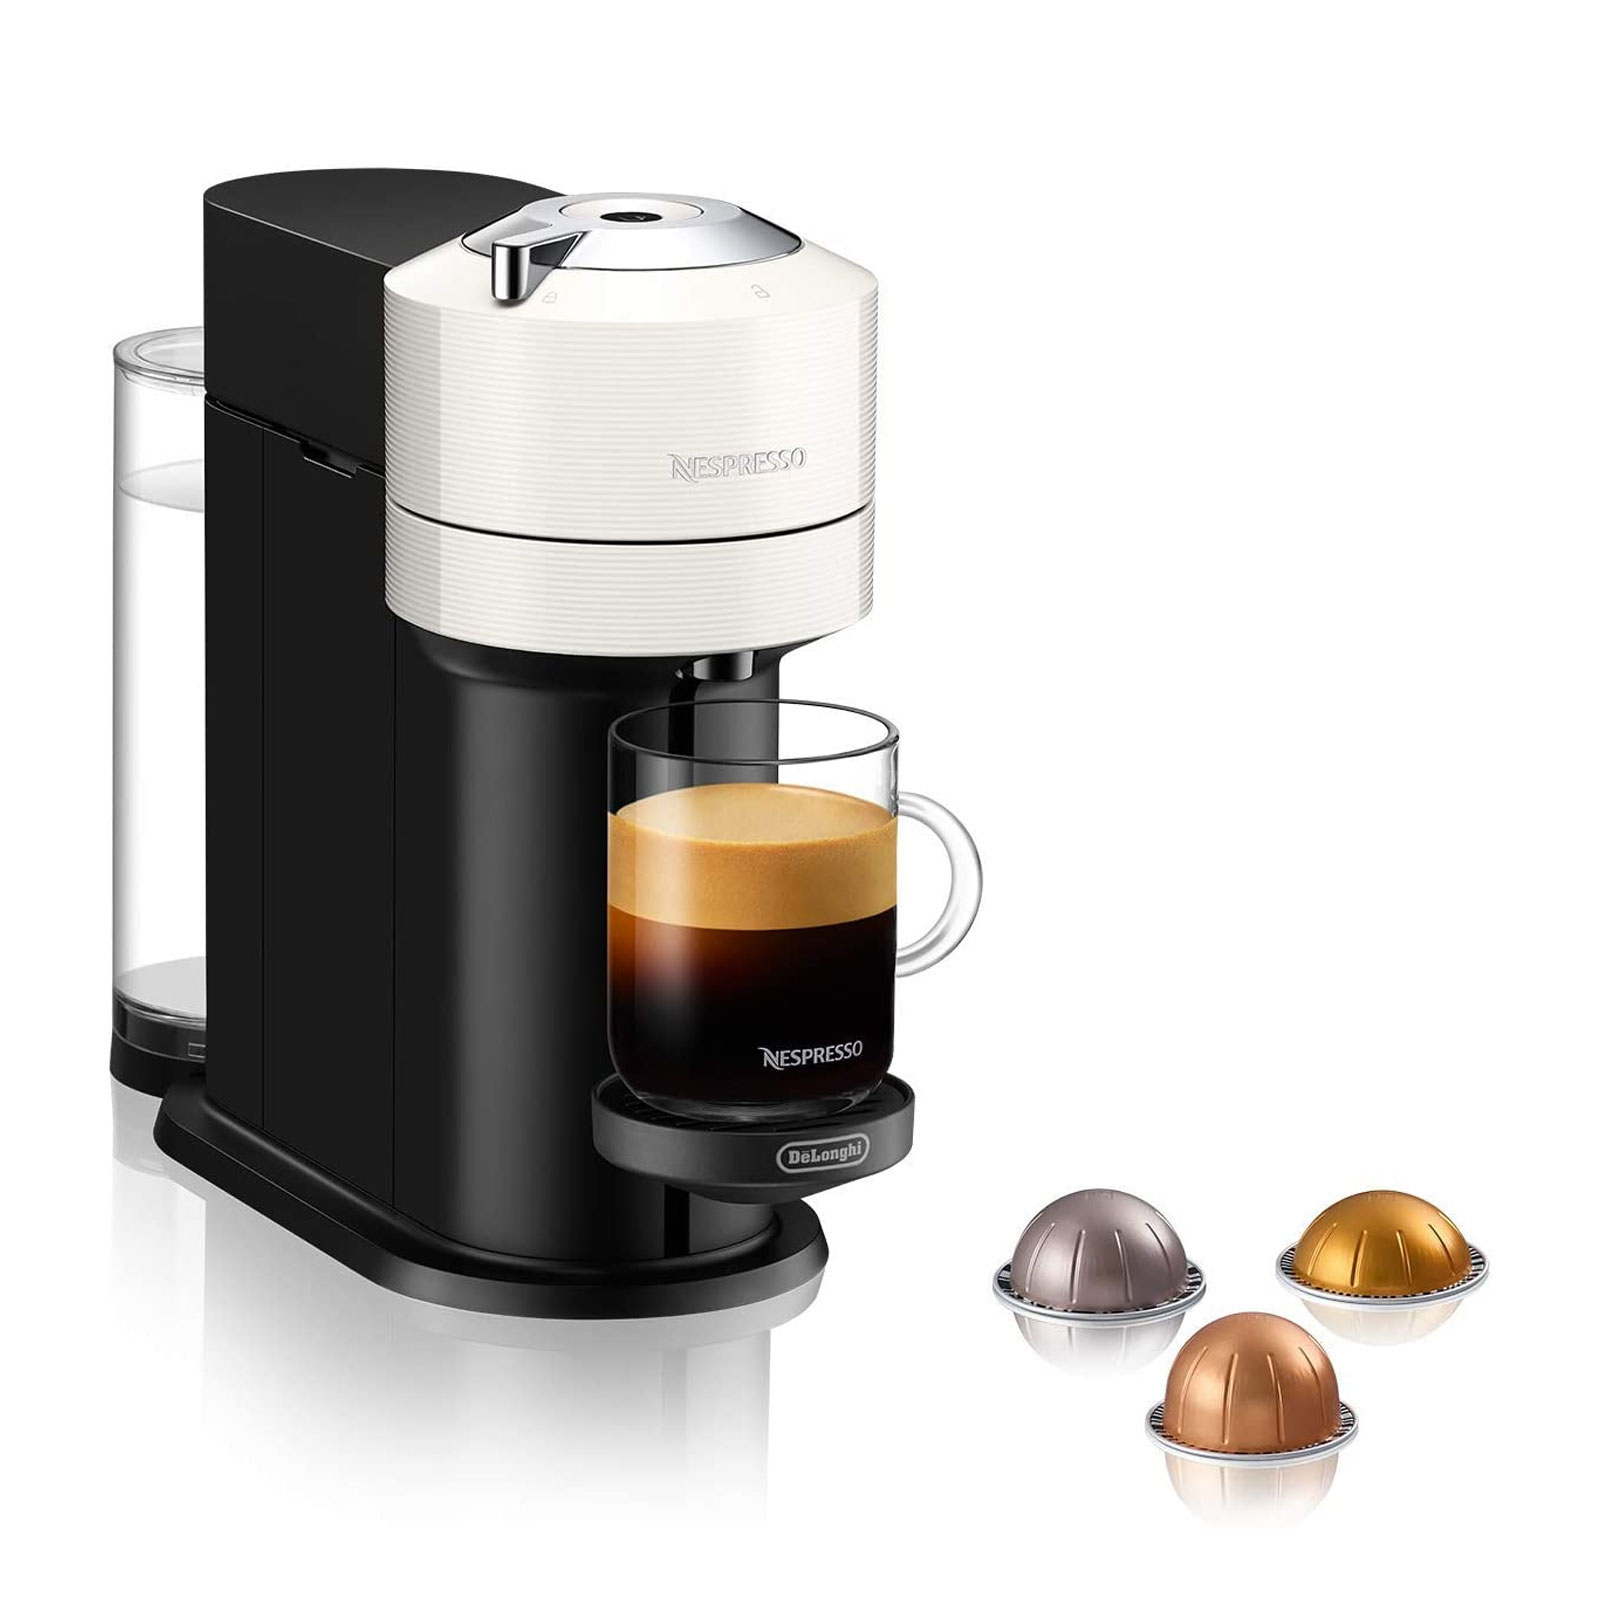 DeLonghi ENV120.W Vertuo Next Basic Nespressoautomat + Travel Mug 400ml